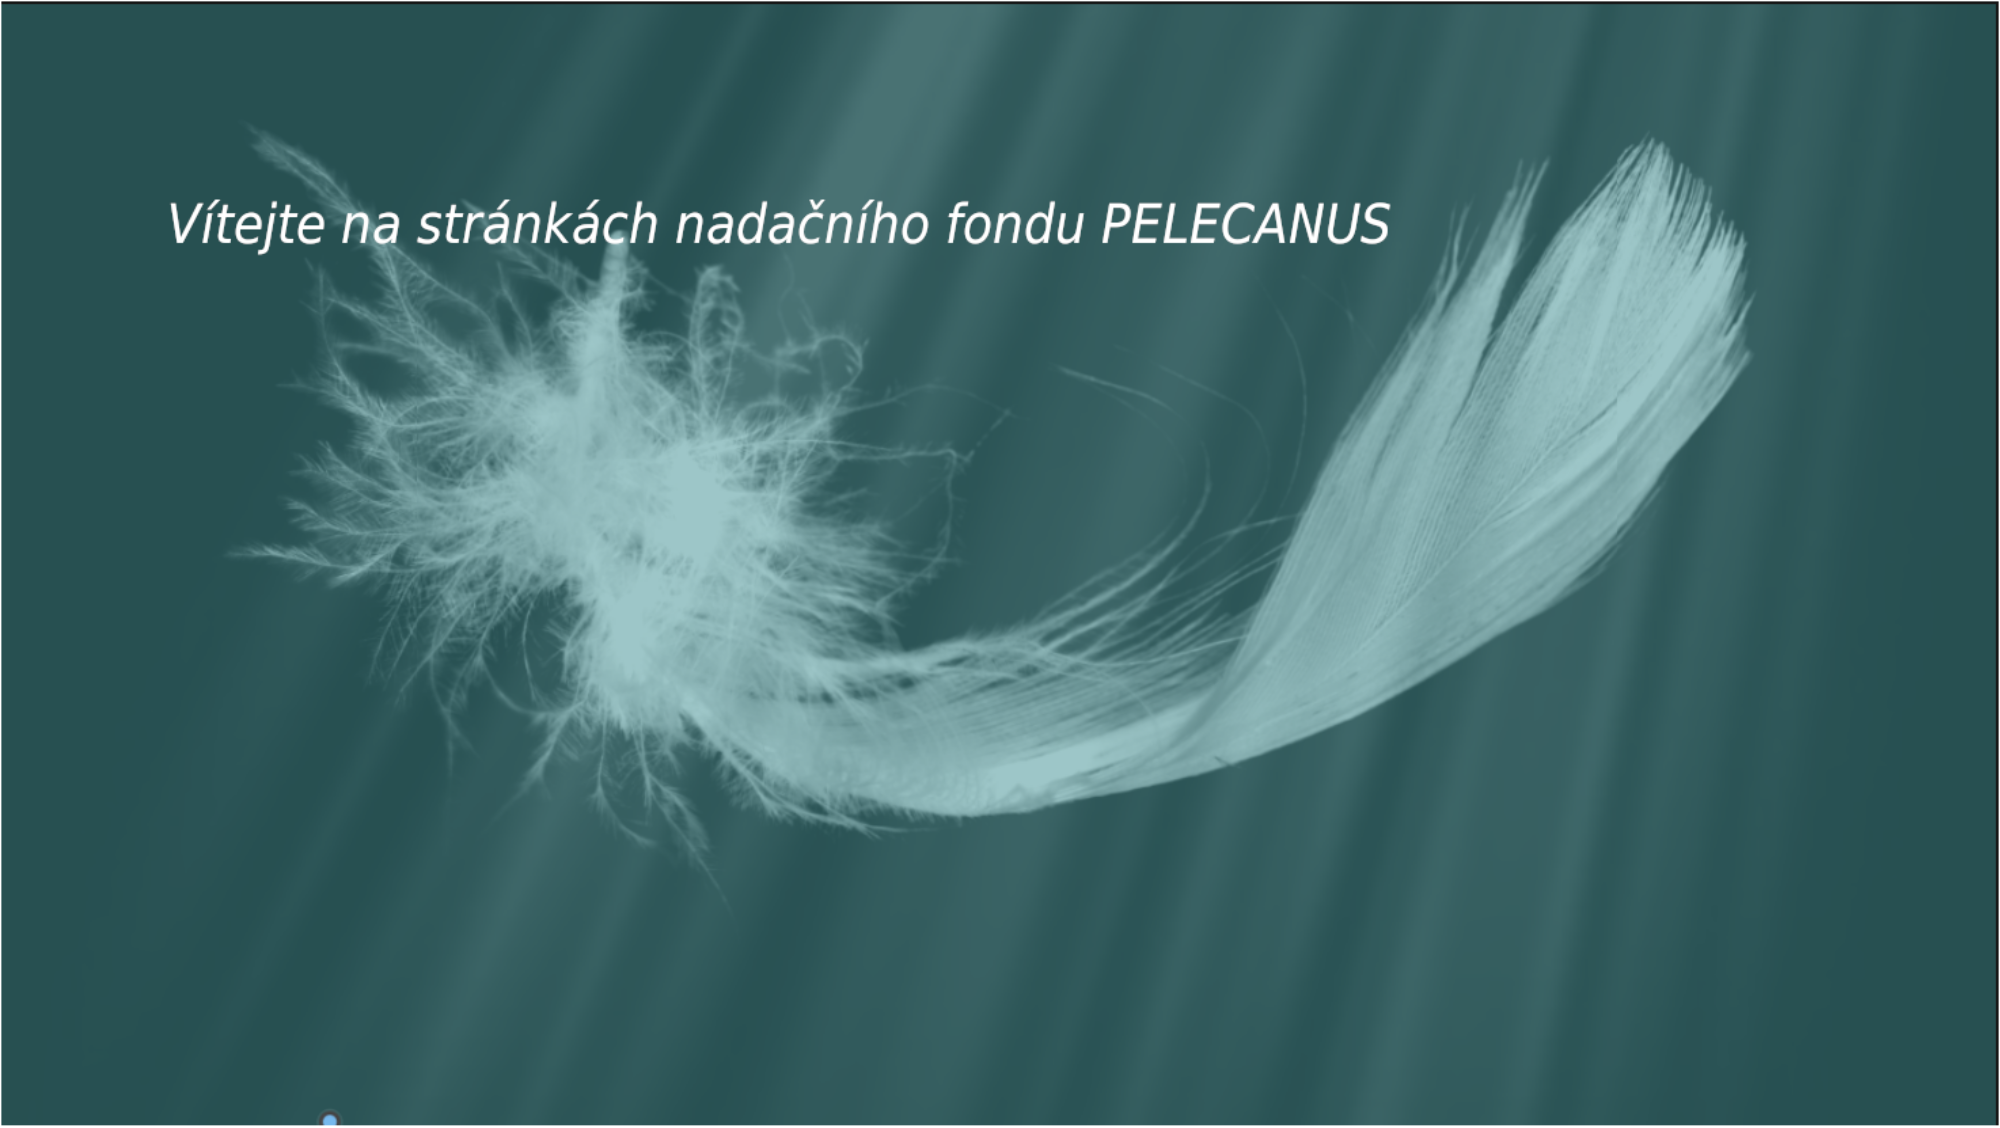 www.pelecanus.cz